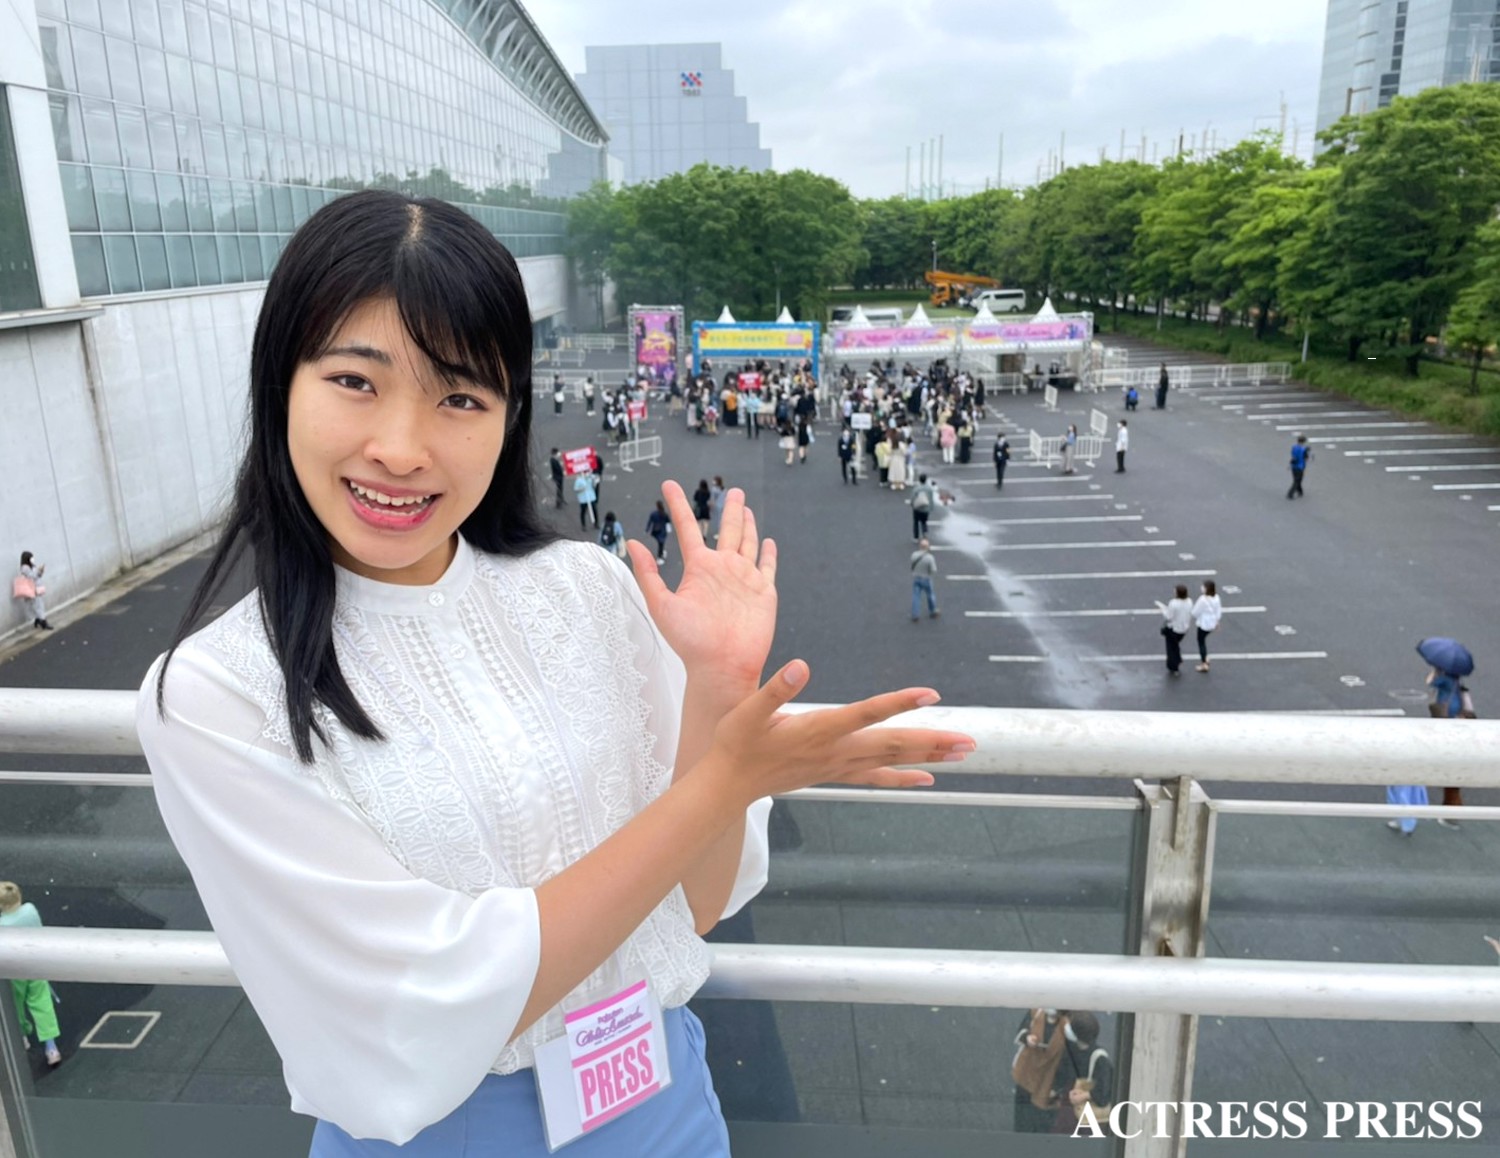 遠藤葵 ACTRESS PRESS REPORTER